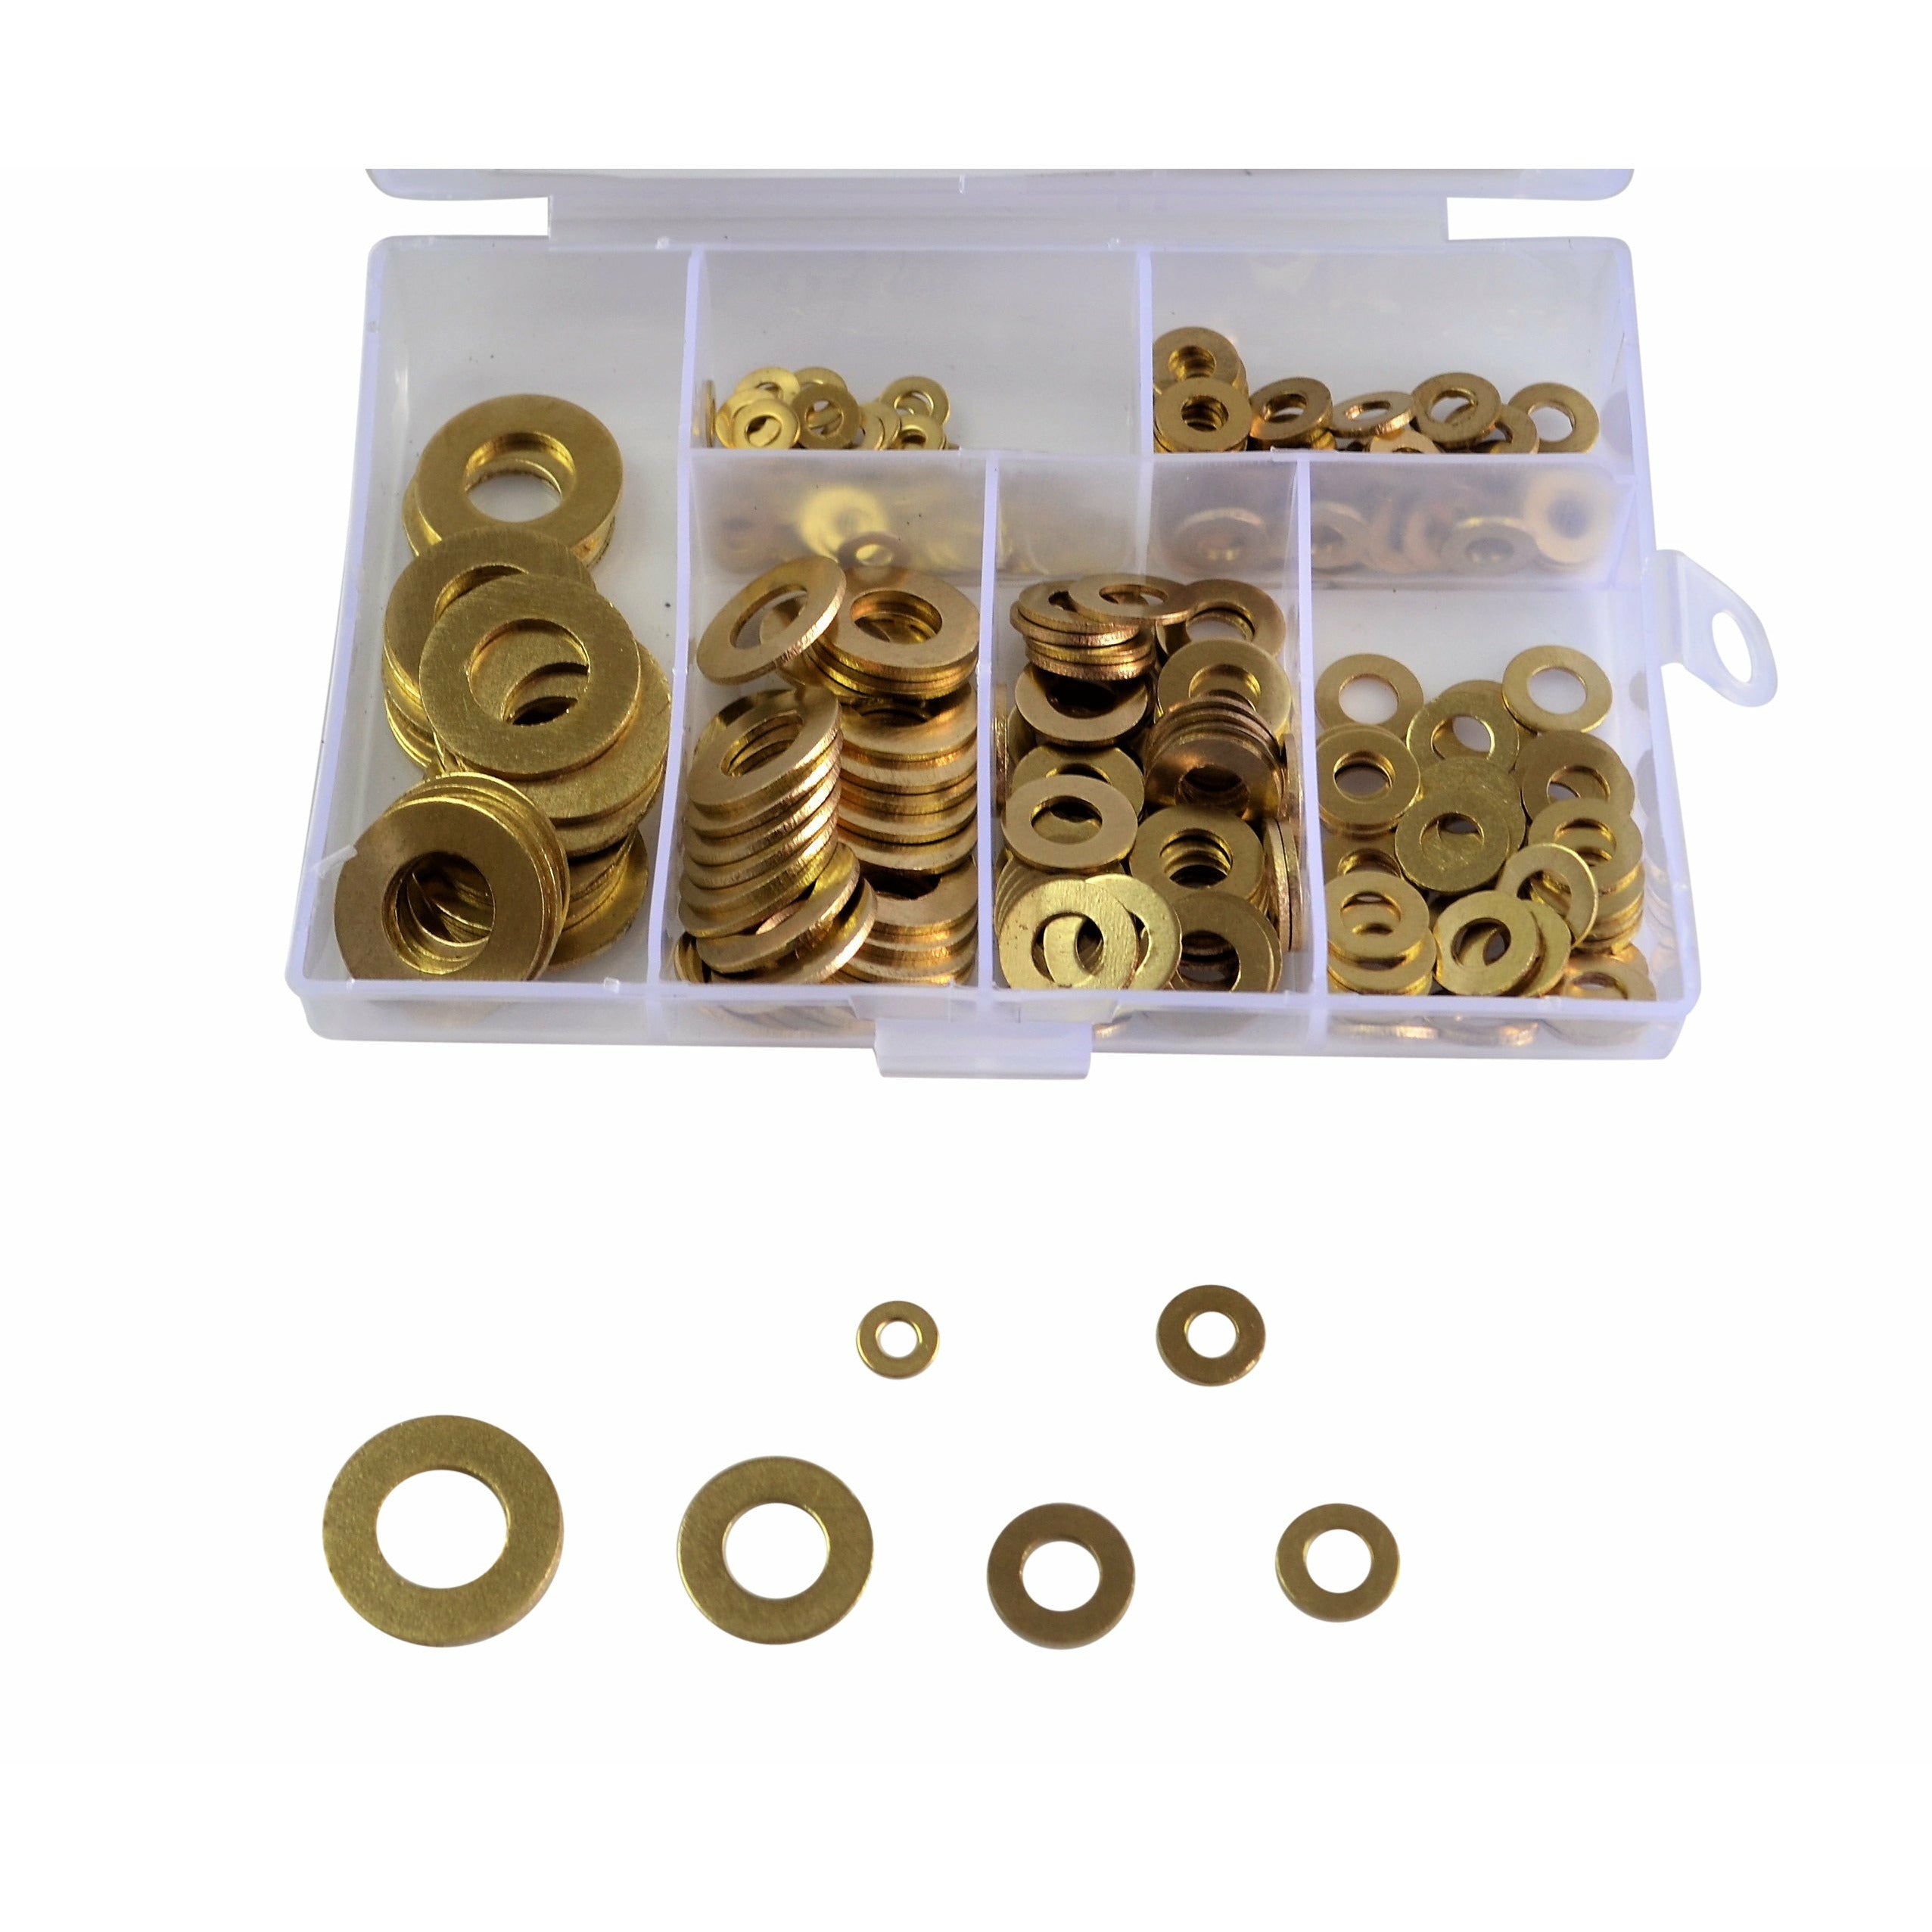 280 Piece Hex Metric Brass Nut and 250 Piece Brass Washers Grab Kit Assortment